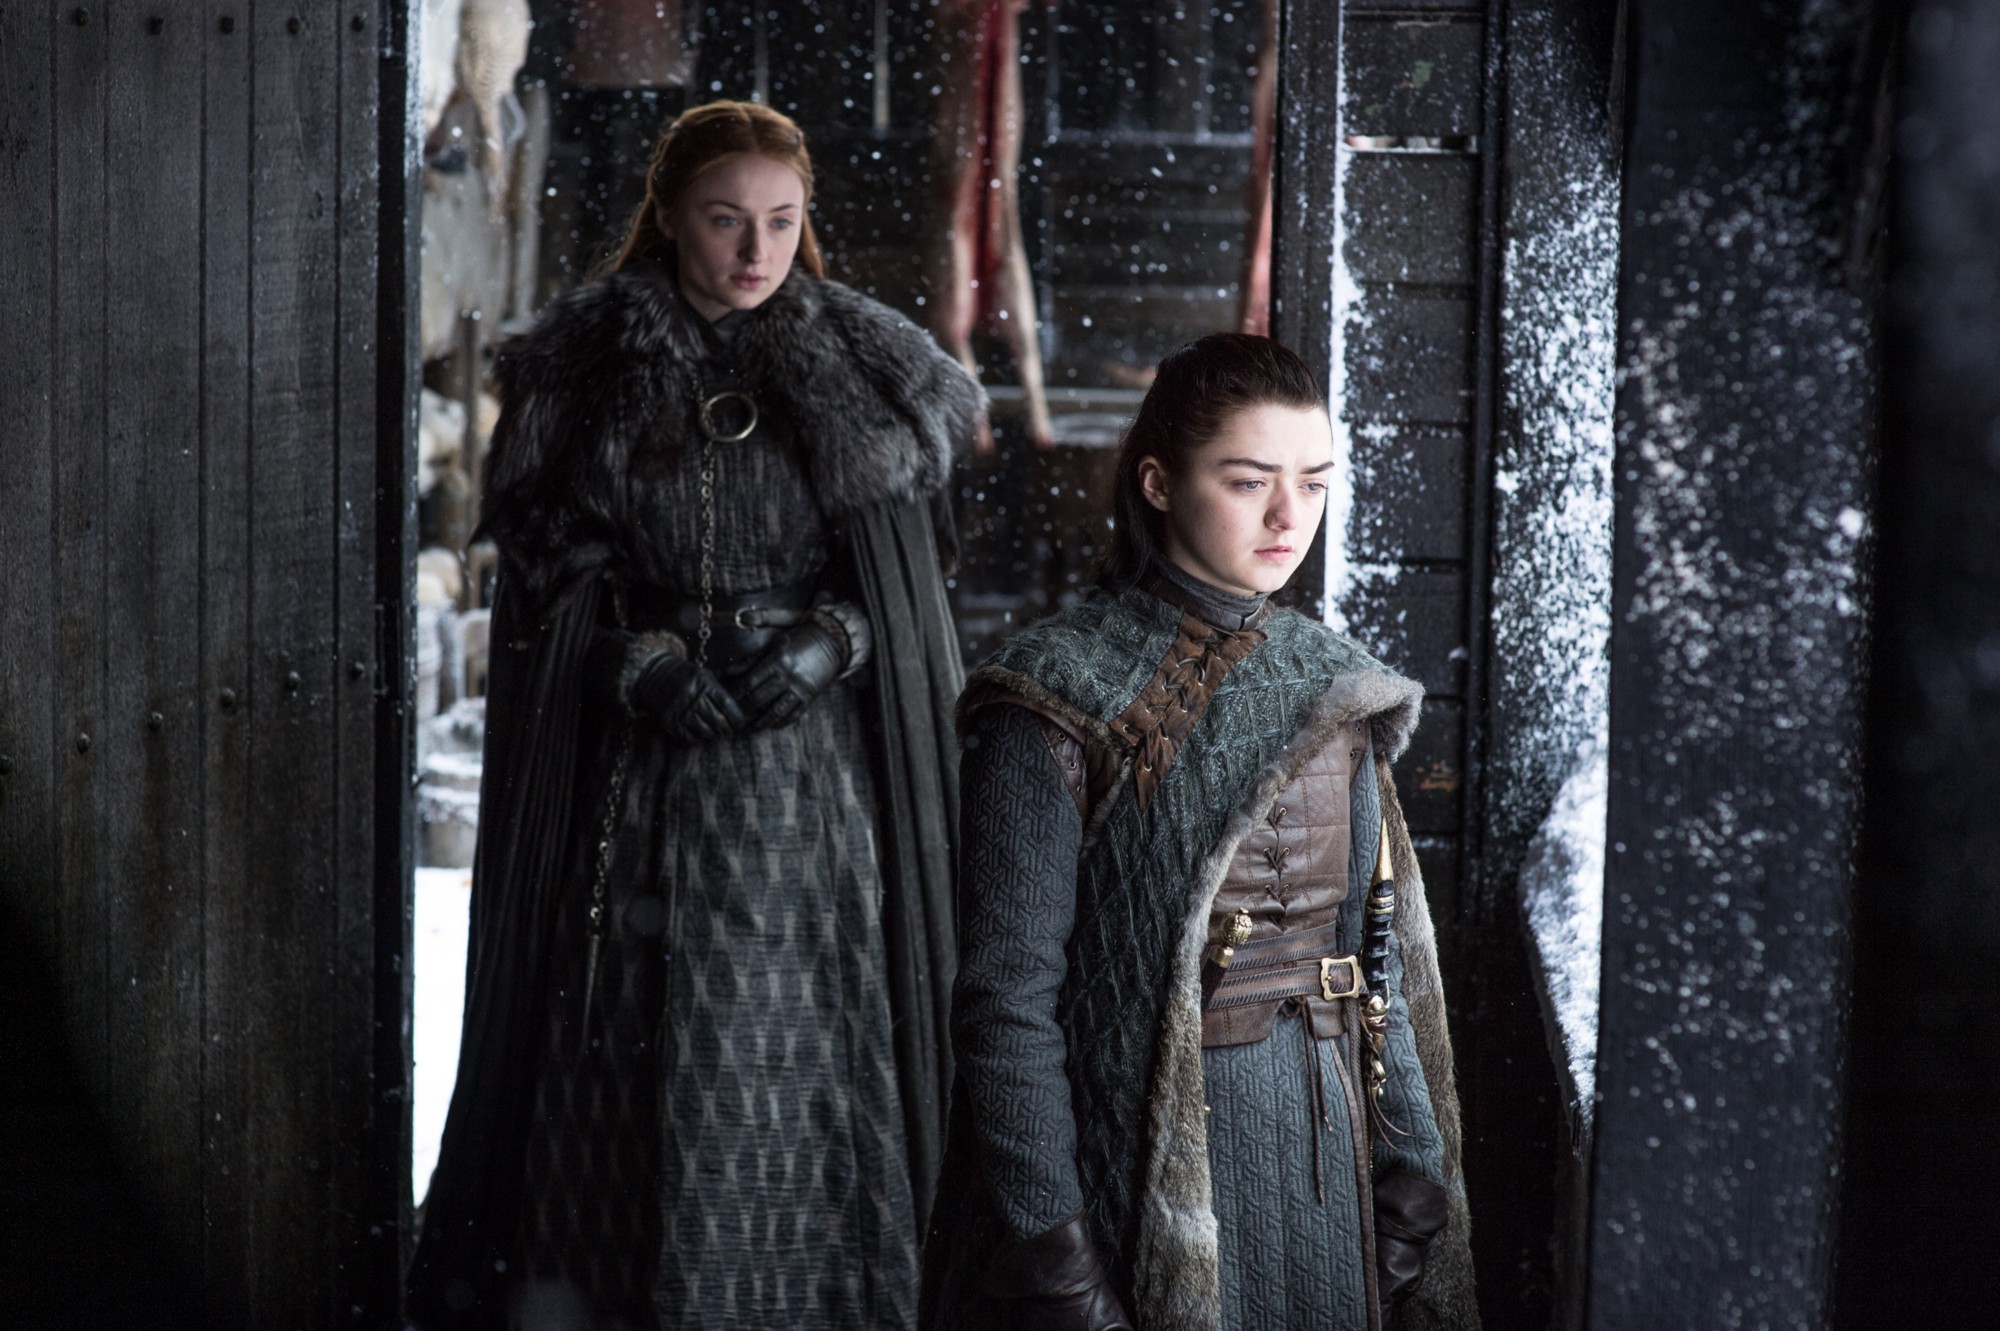 Sophie Turner as Sansa Stark and Maisie Williams as Arya Stark in HBO's Game of Thrones (Credit: Helen Sloan/HBO)